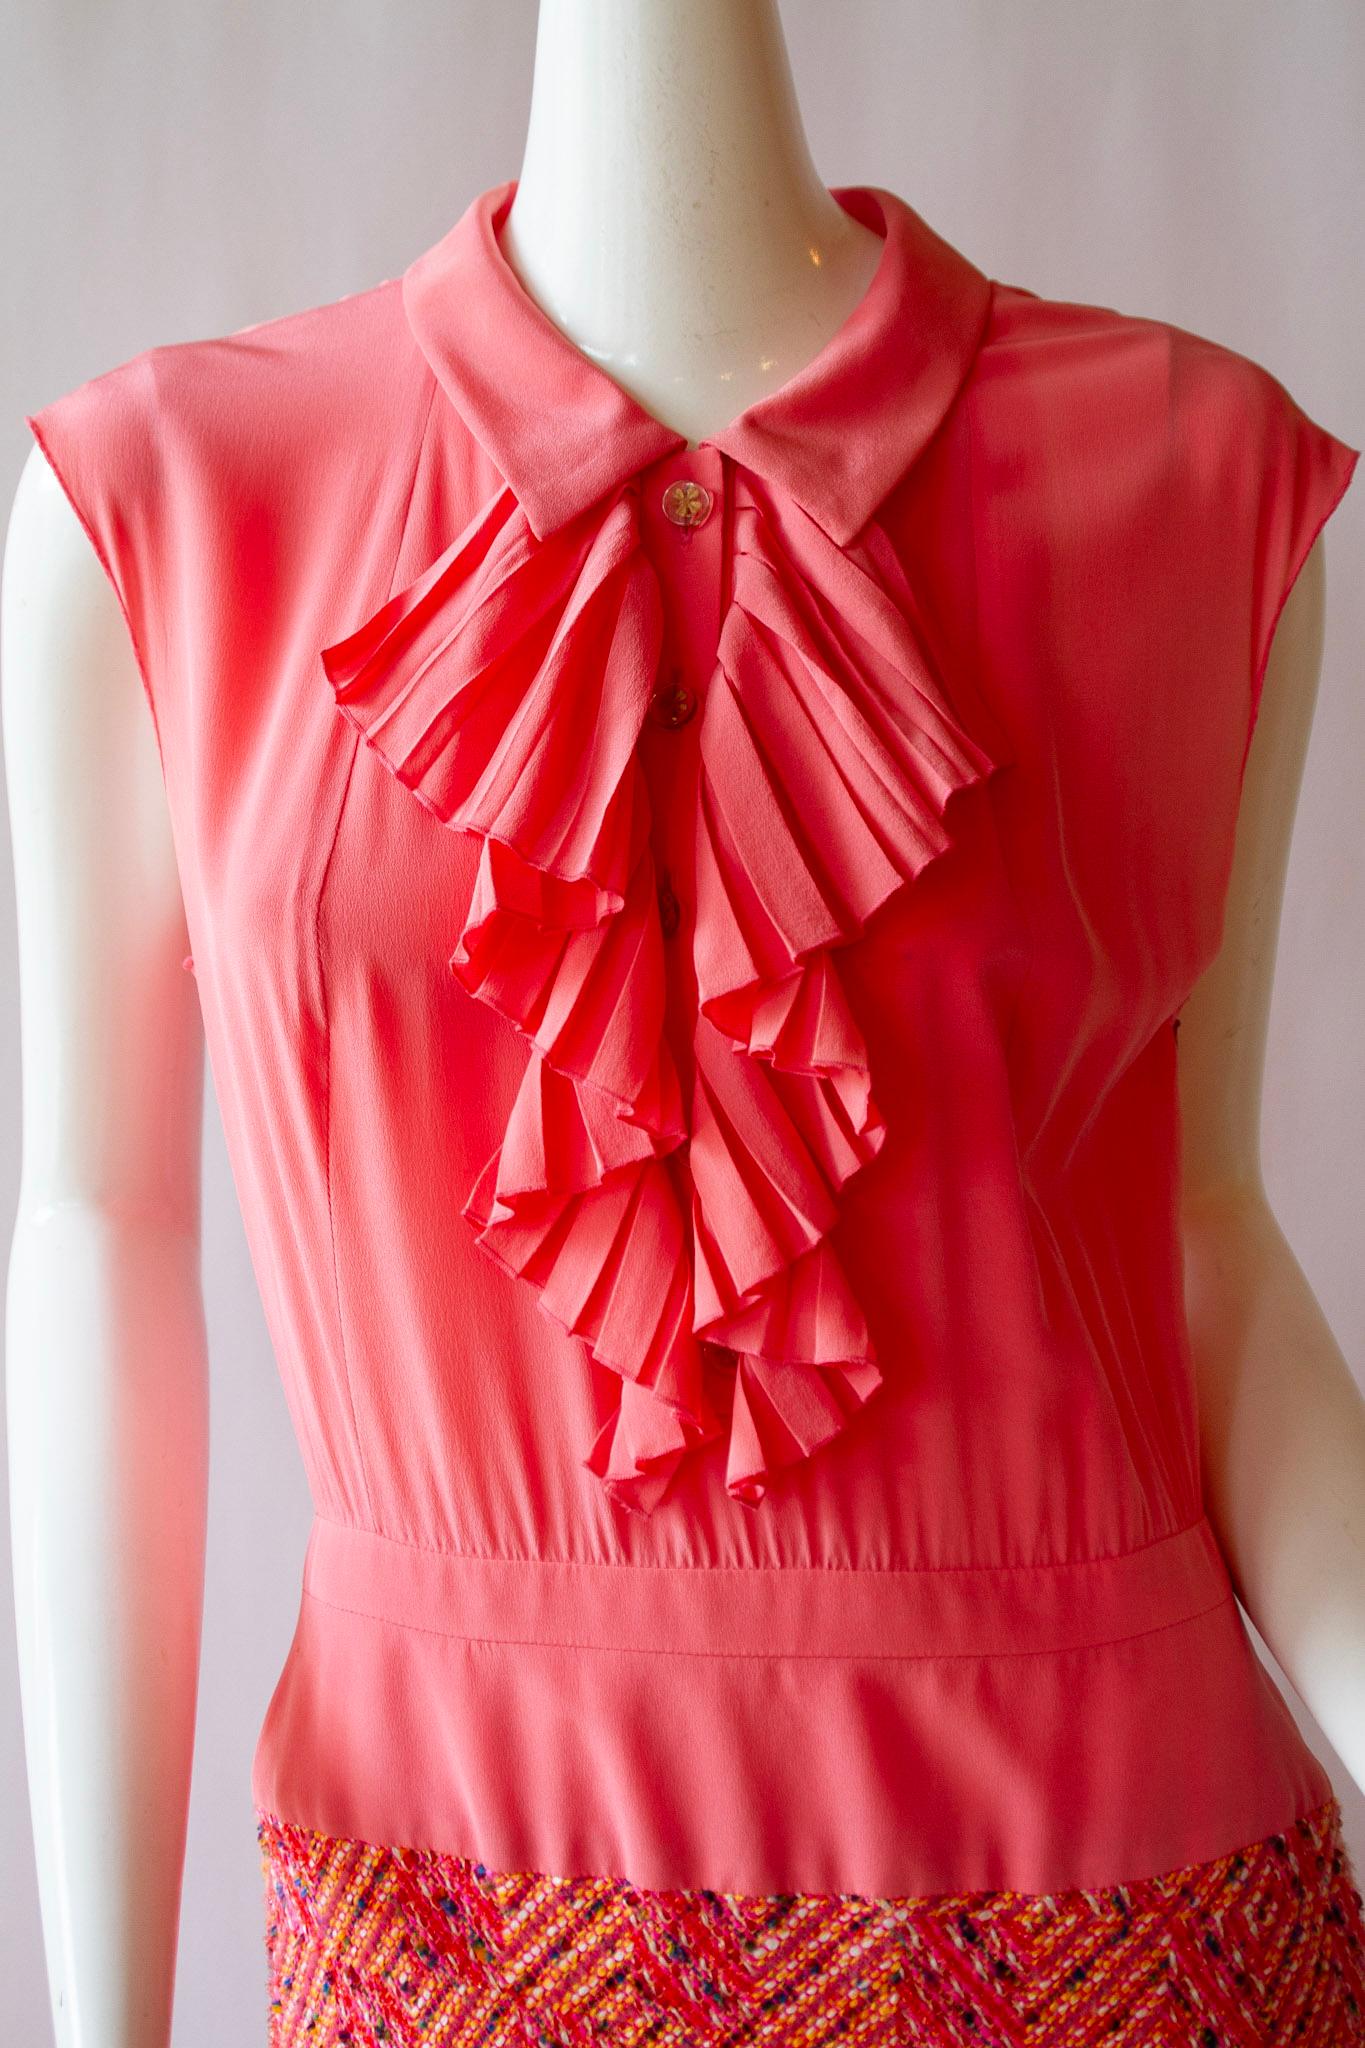 Spring 2001 Chanel pink silk/tweed dress.

EU 42